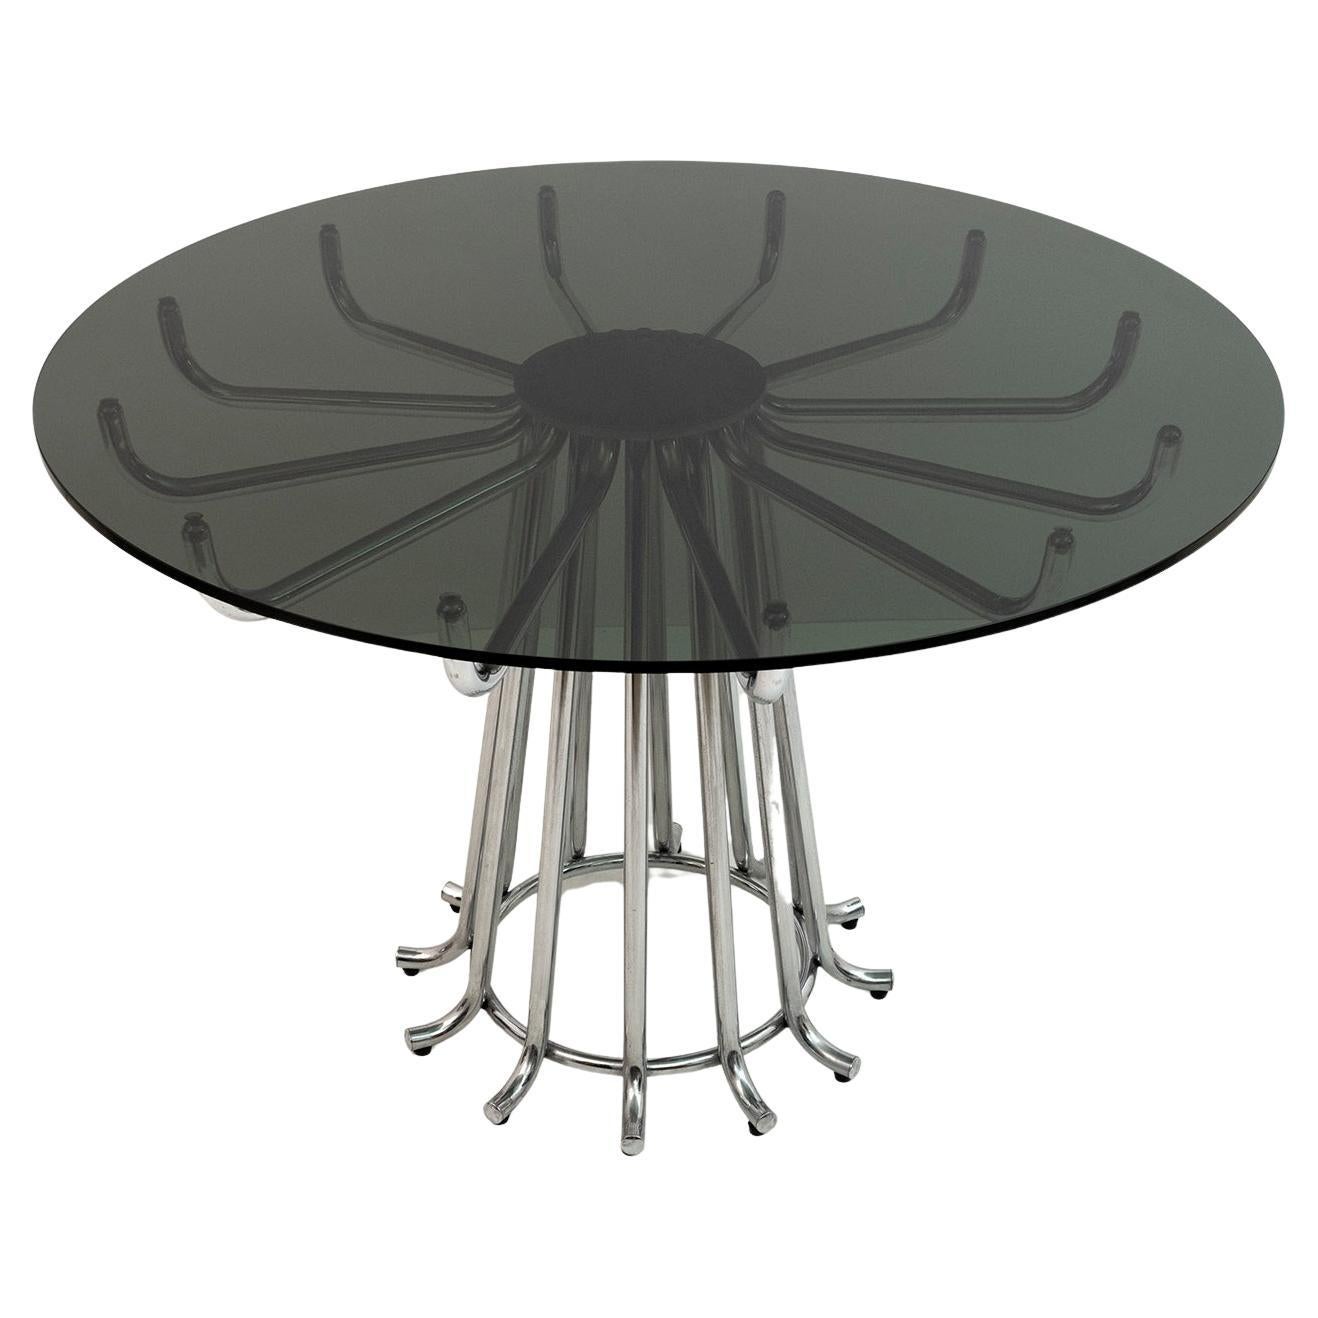 Gastone Rinaldi Mid-Century Modern Italian Chromed Metal Round Dining Table, 70s For Sale